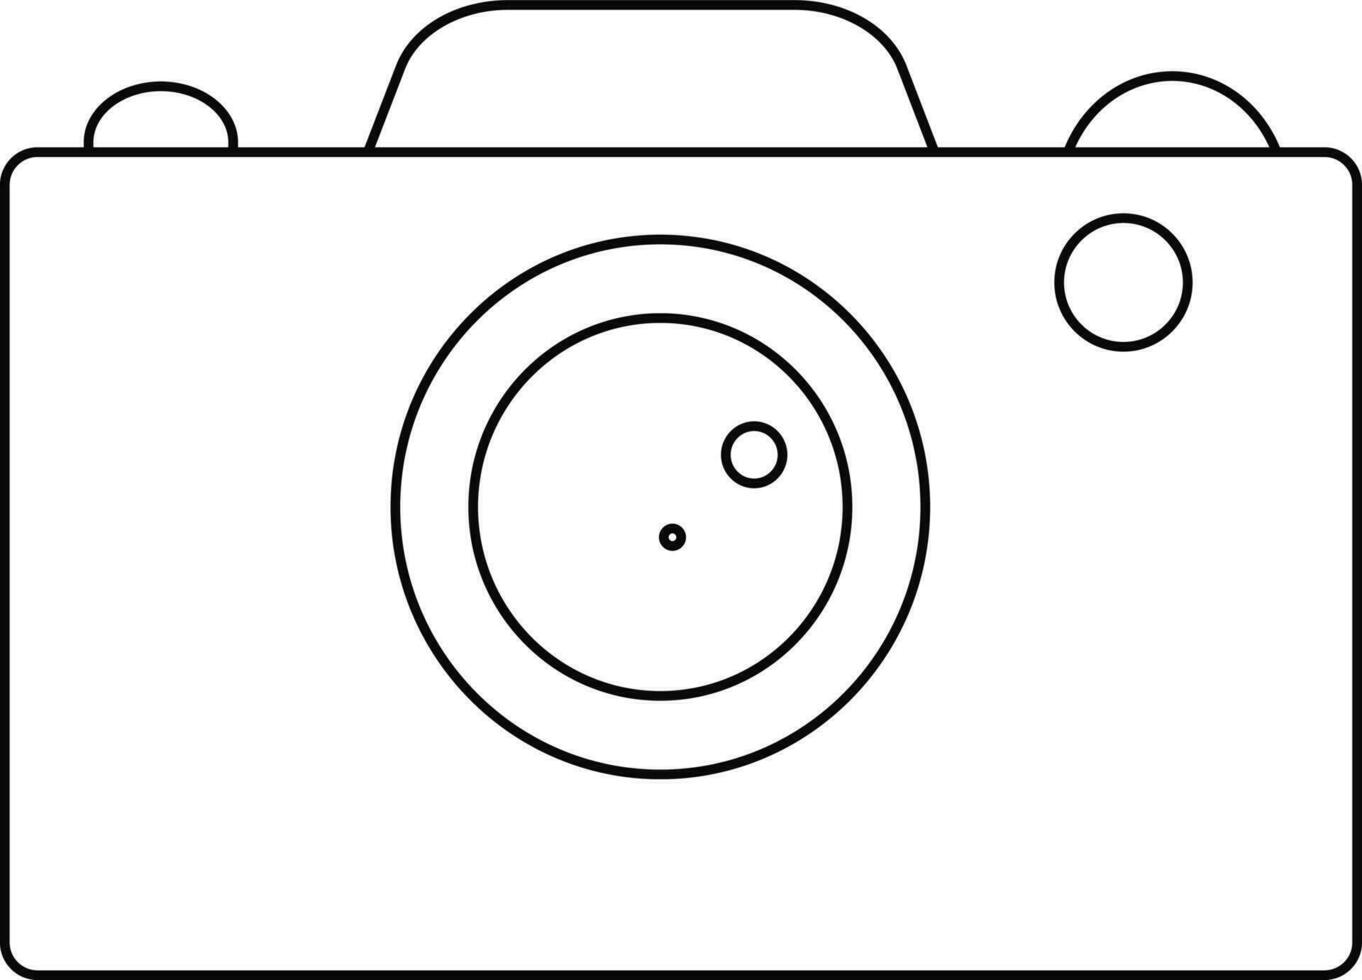 Isolated camera in black line art illustration. vector